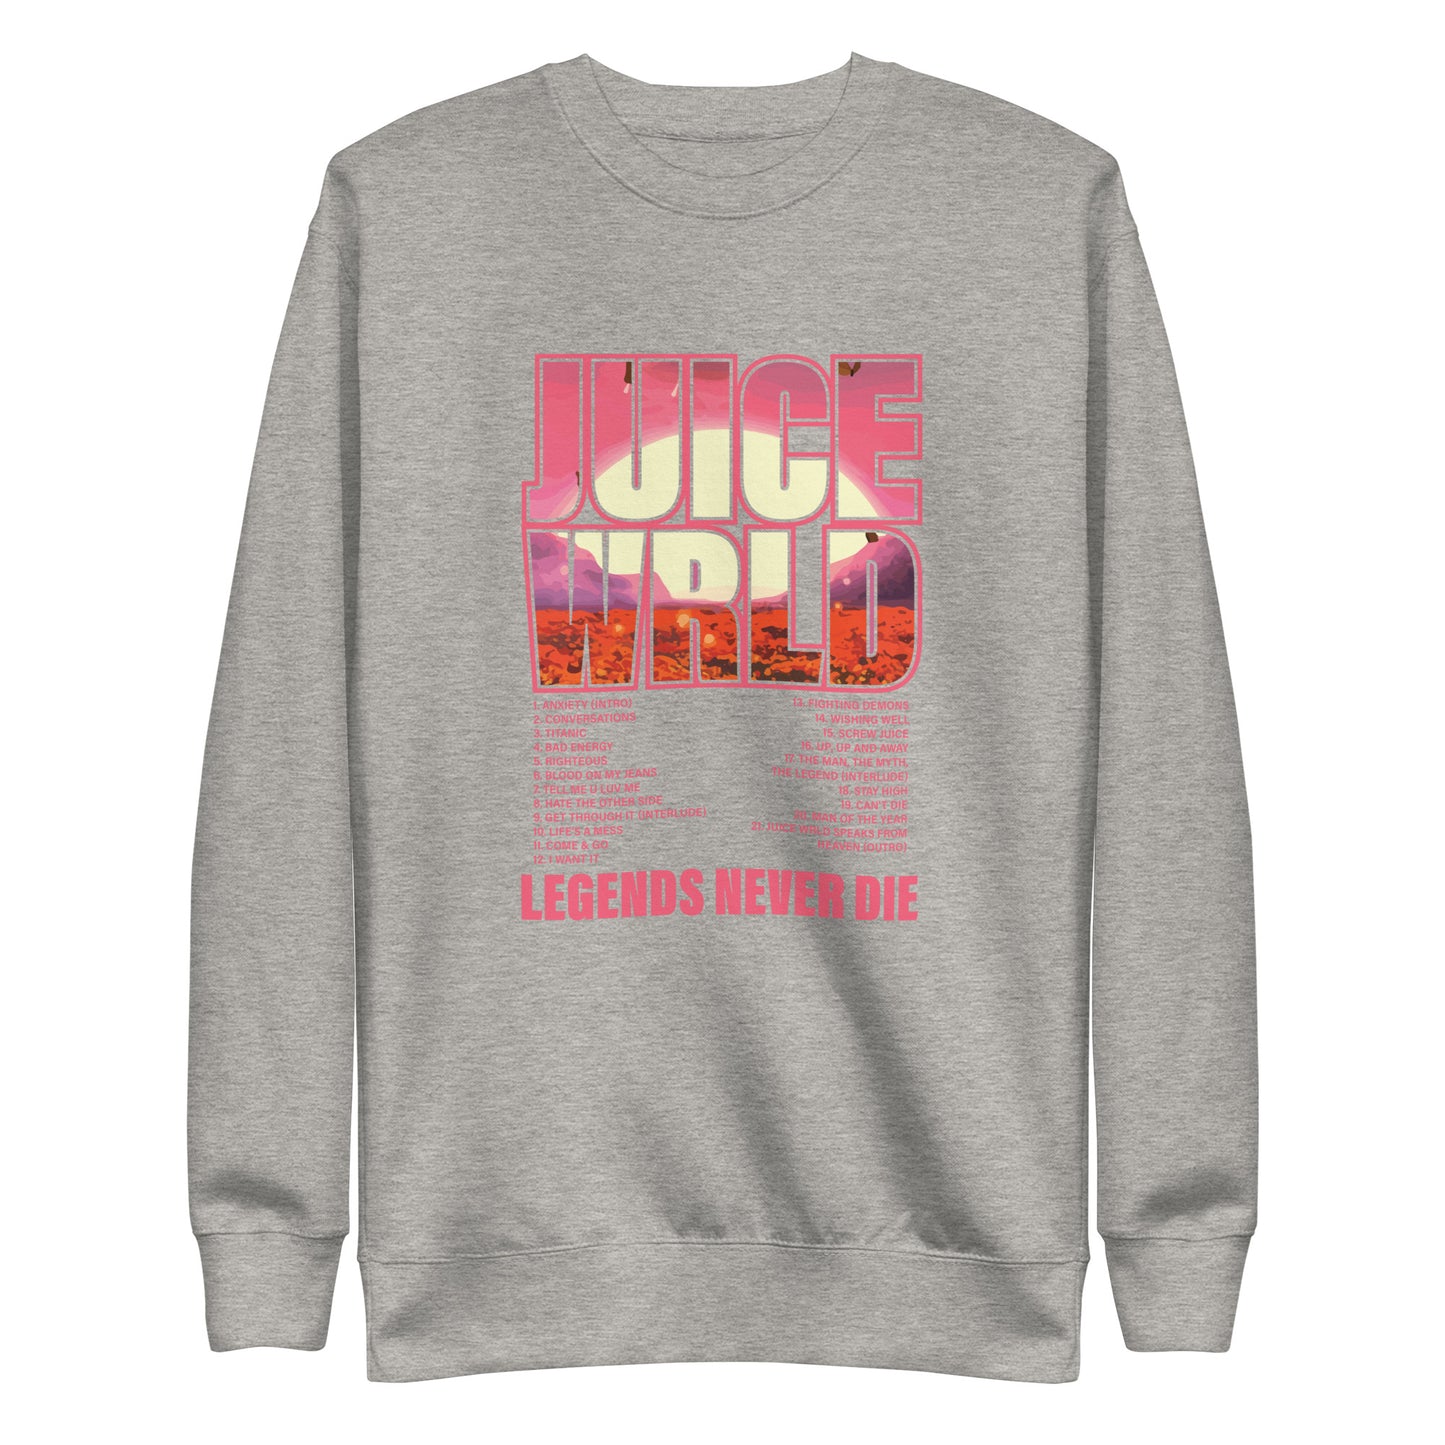 Juice WRLD Sweater (Legends Never Die Album)